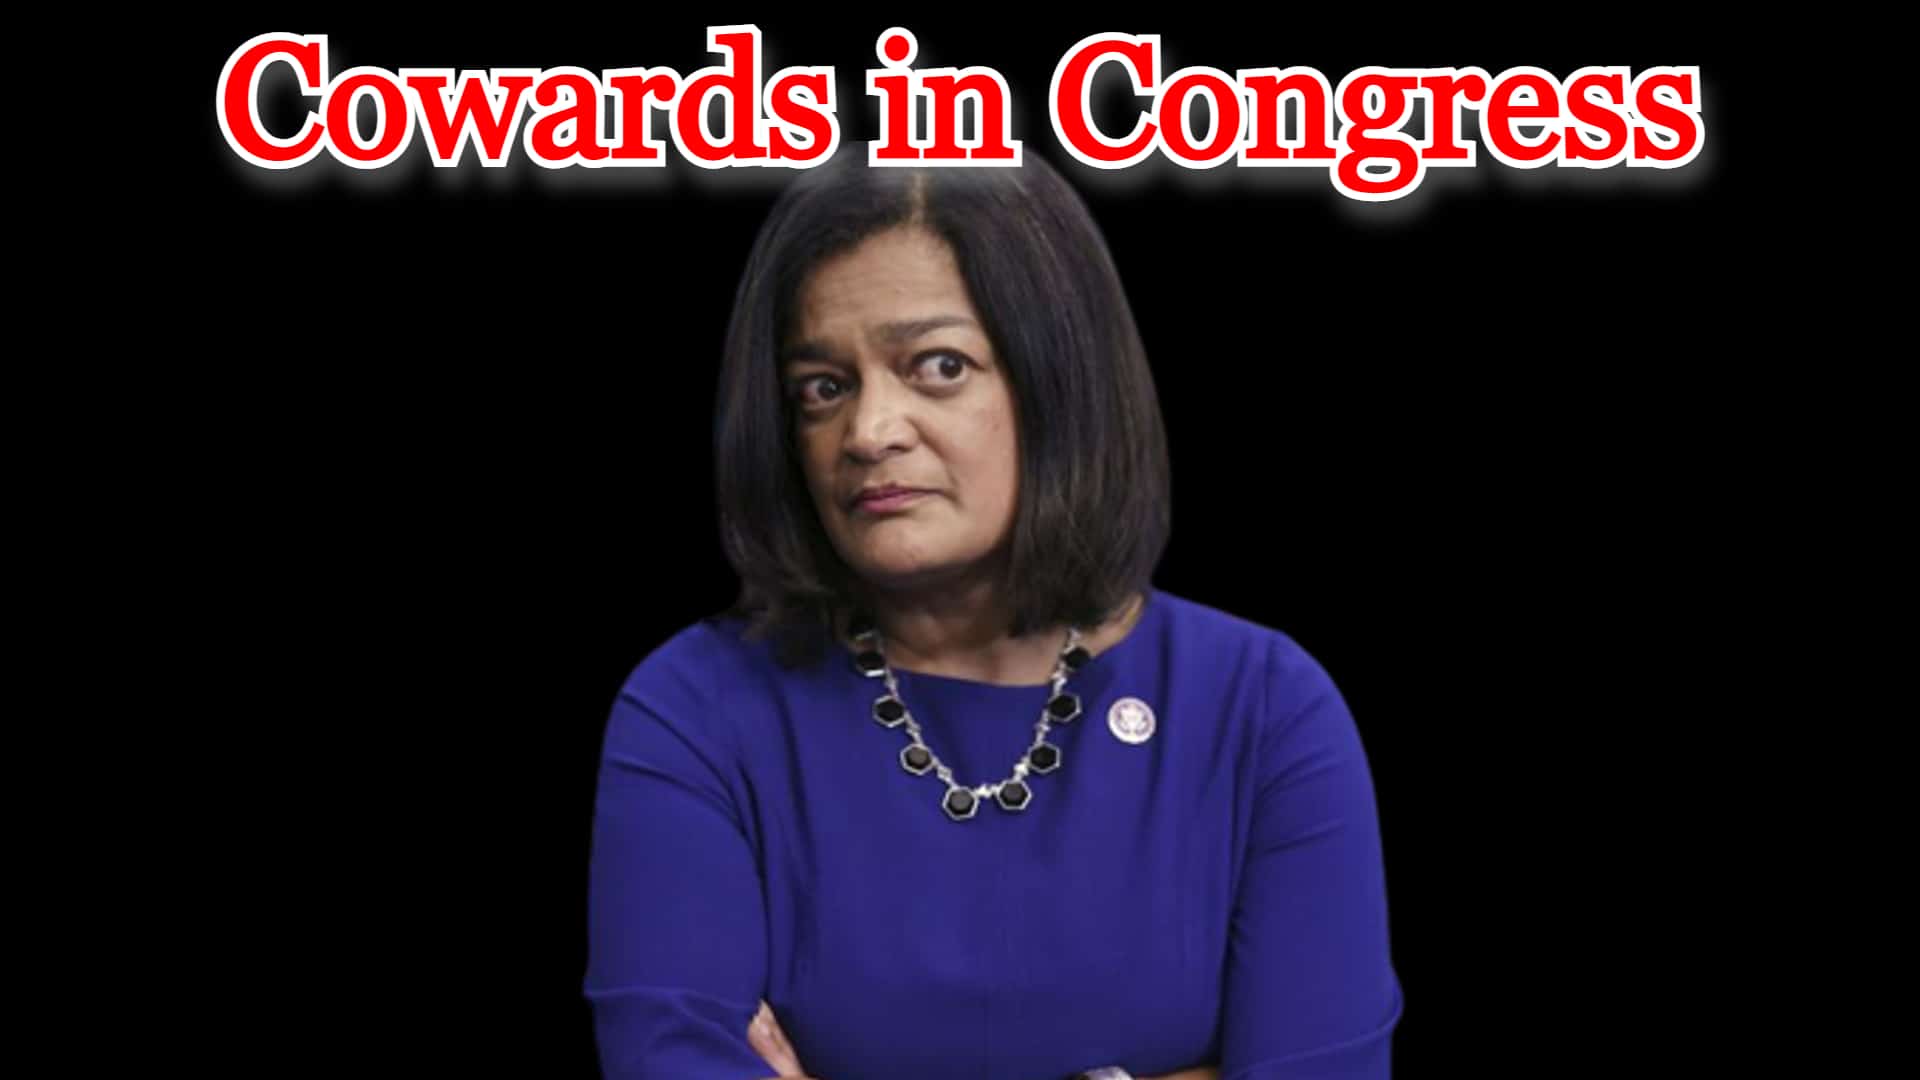 Cowards in Congress: COI #341